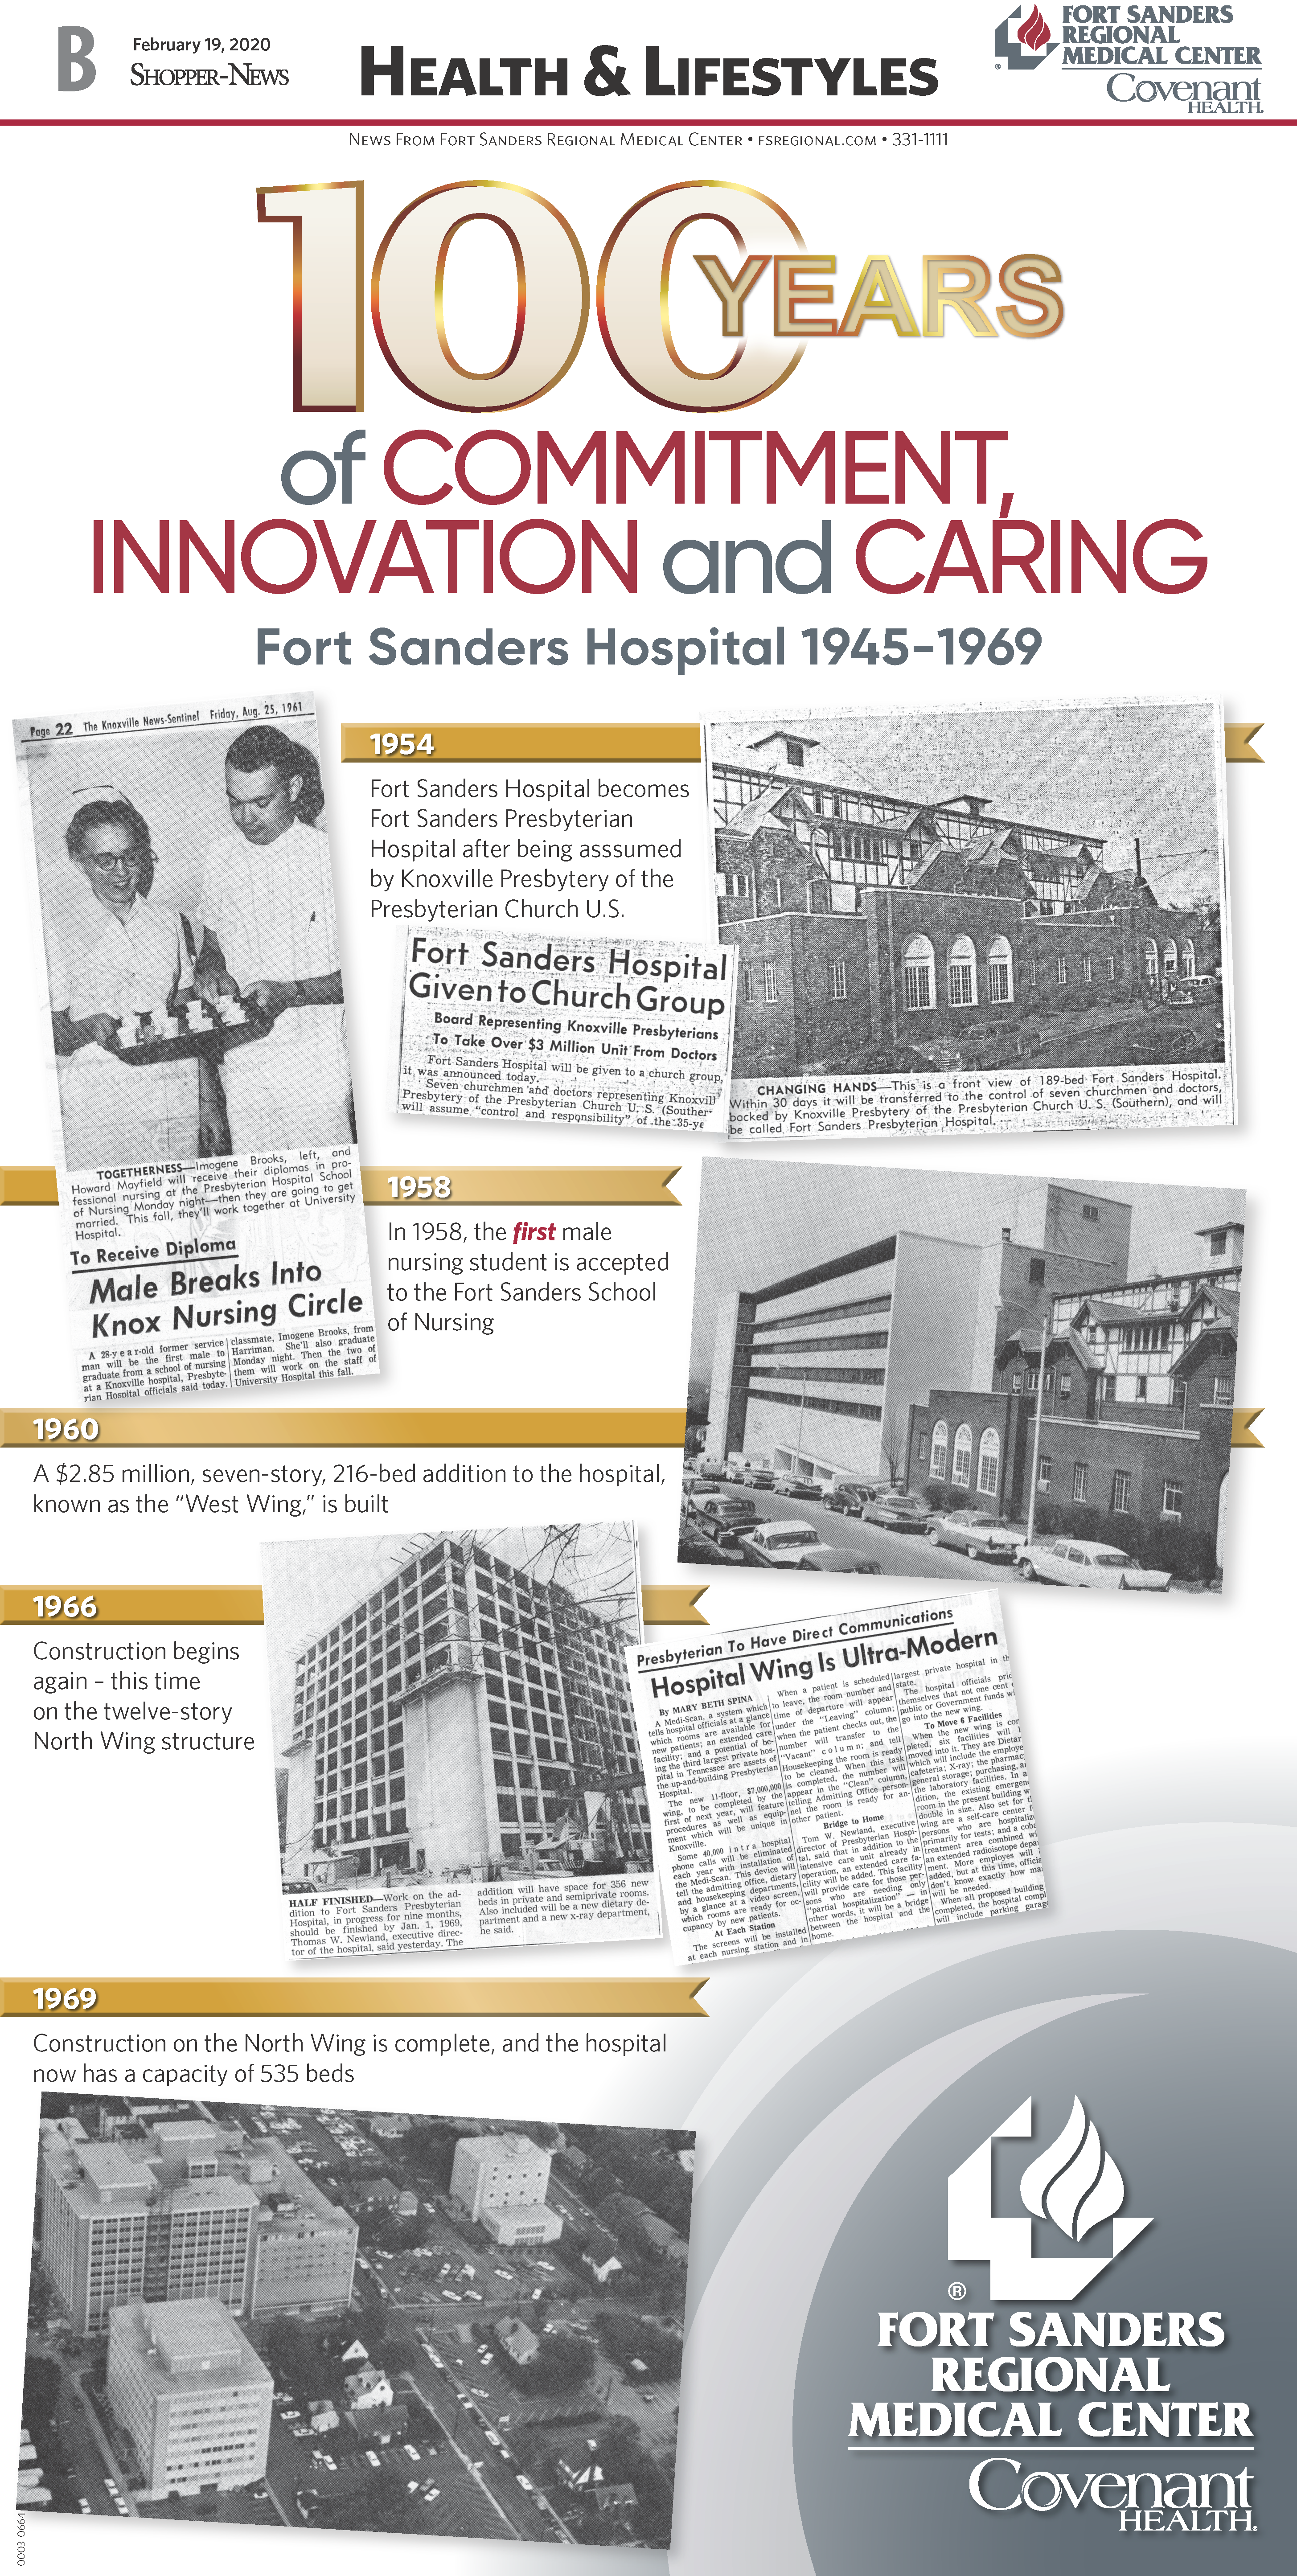 Fort Sanders Regional Medical Center: 1945-1969 Highlights